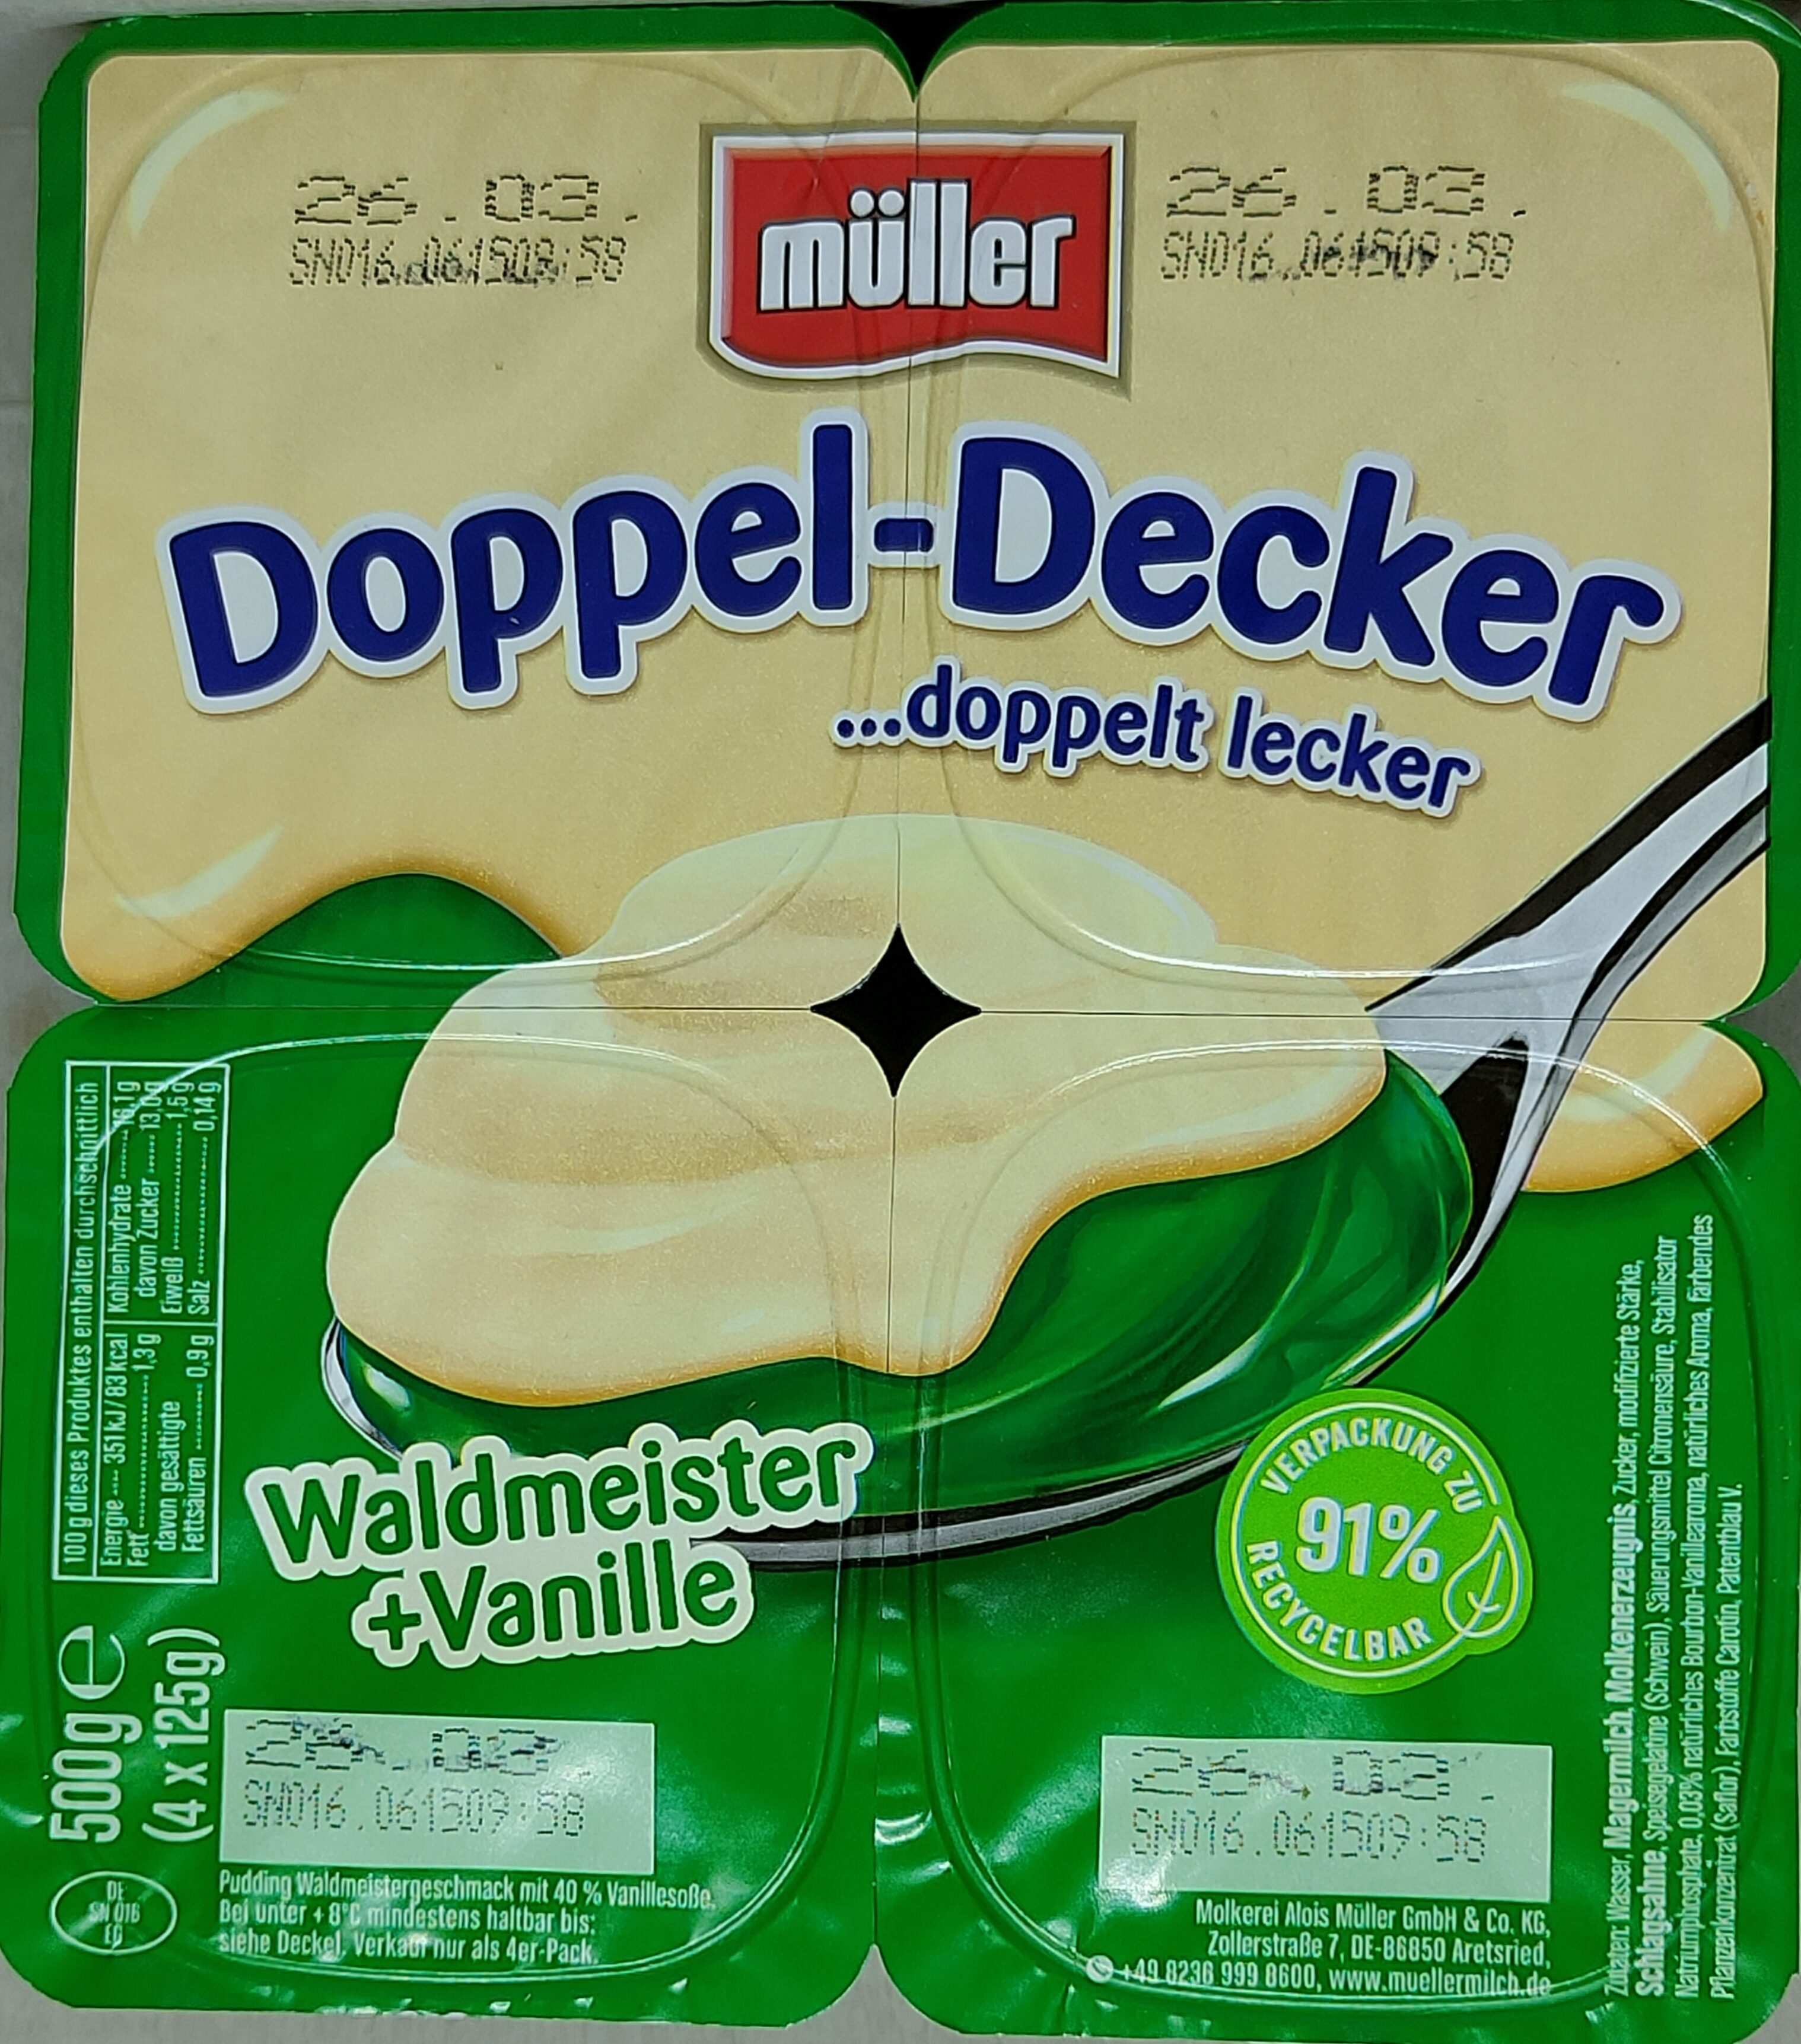 Doppeldecker - Waldmeister + Vanille - Product - de